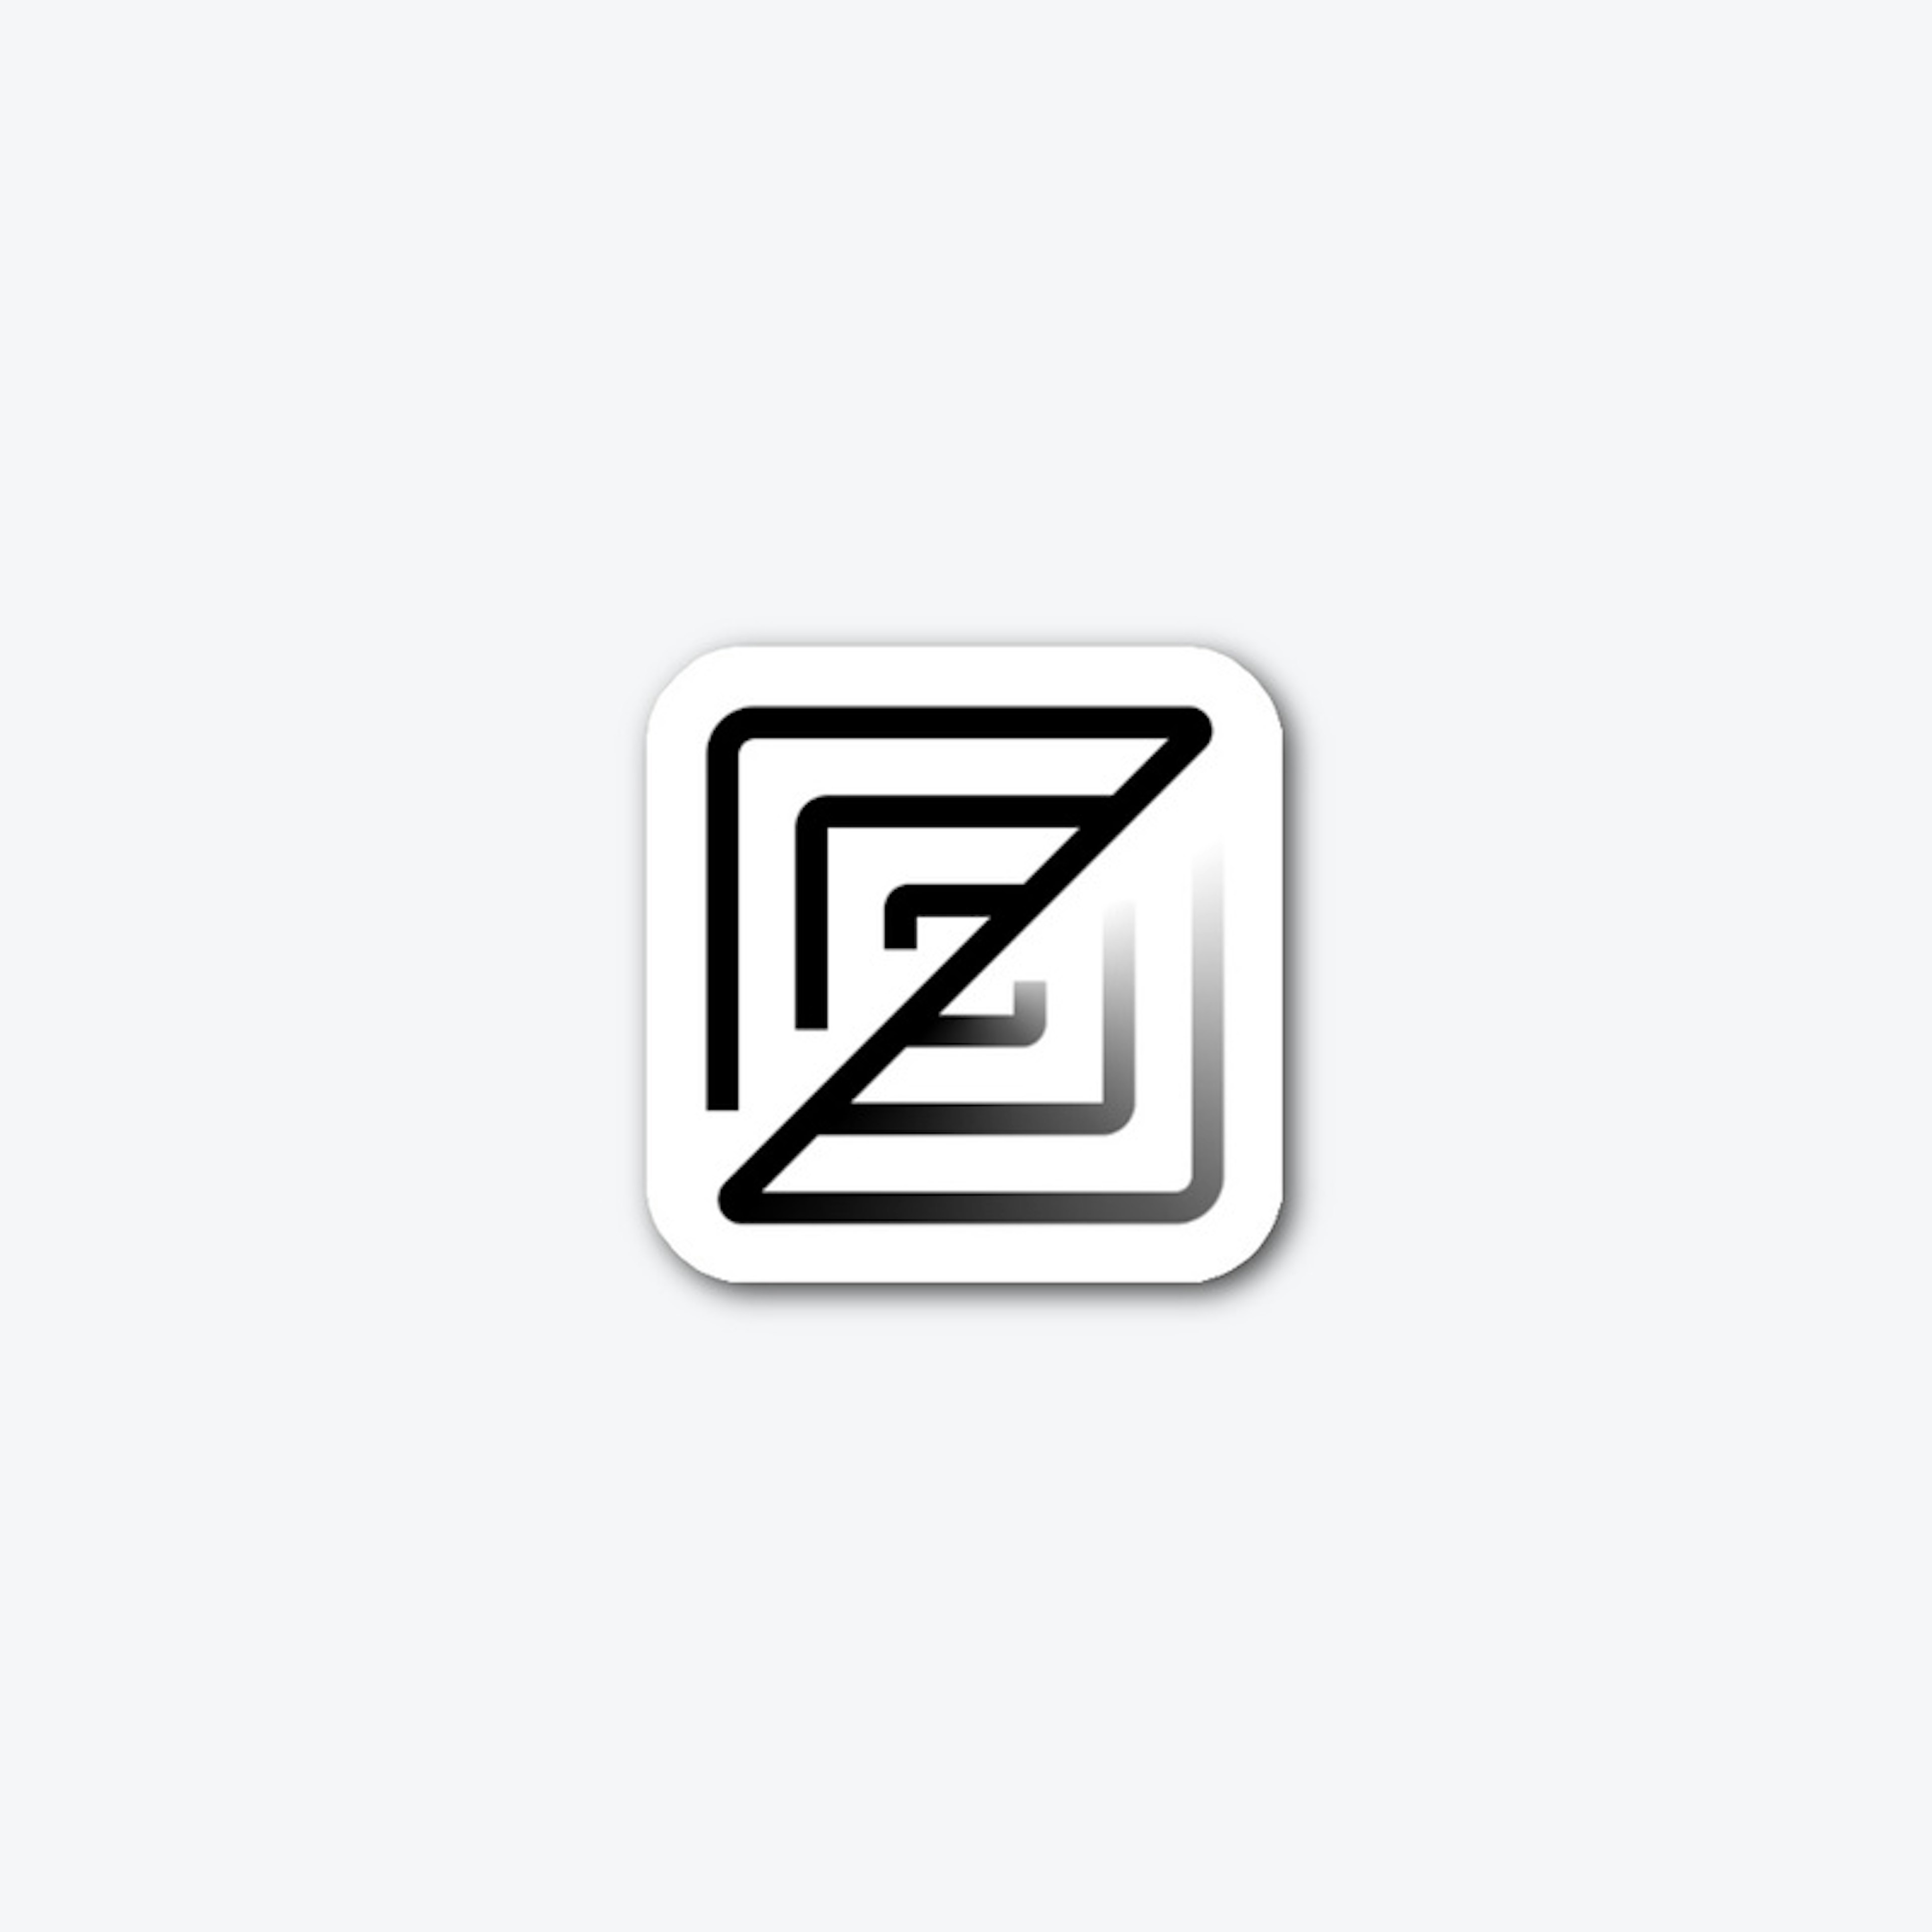 Zed Logo Black Sticker